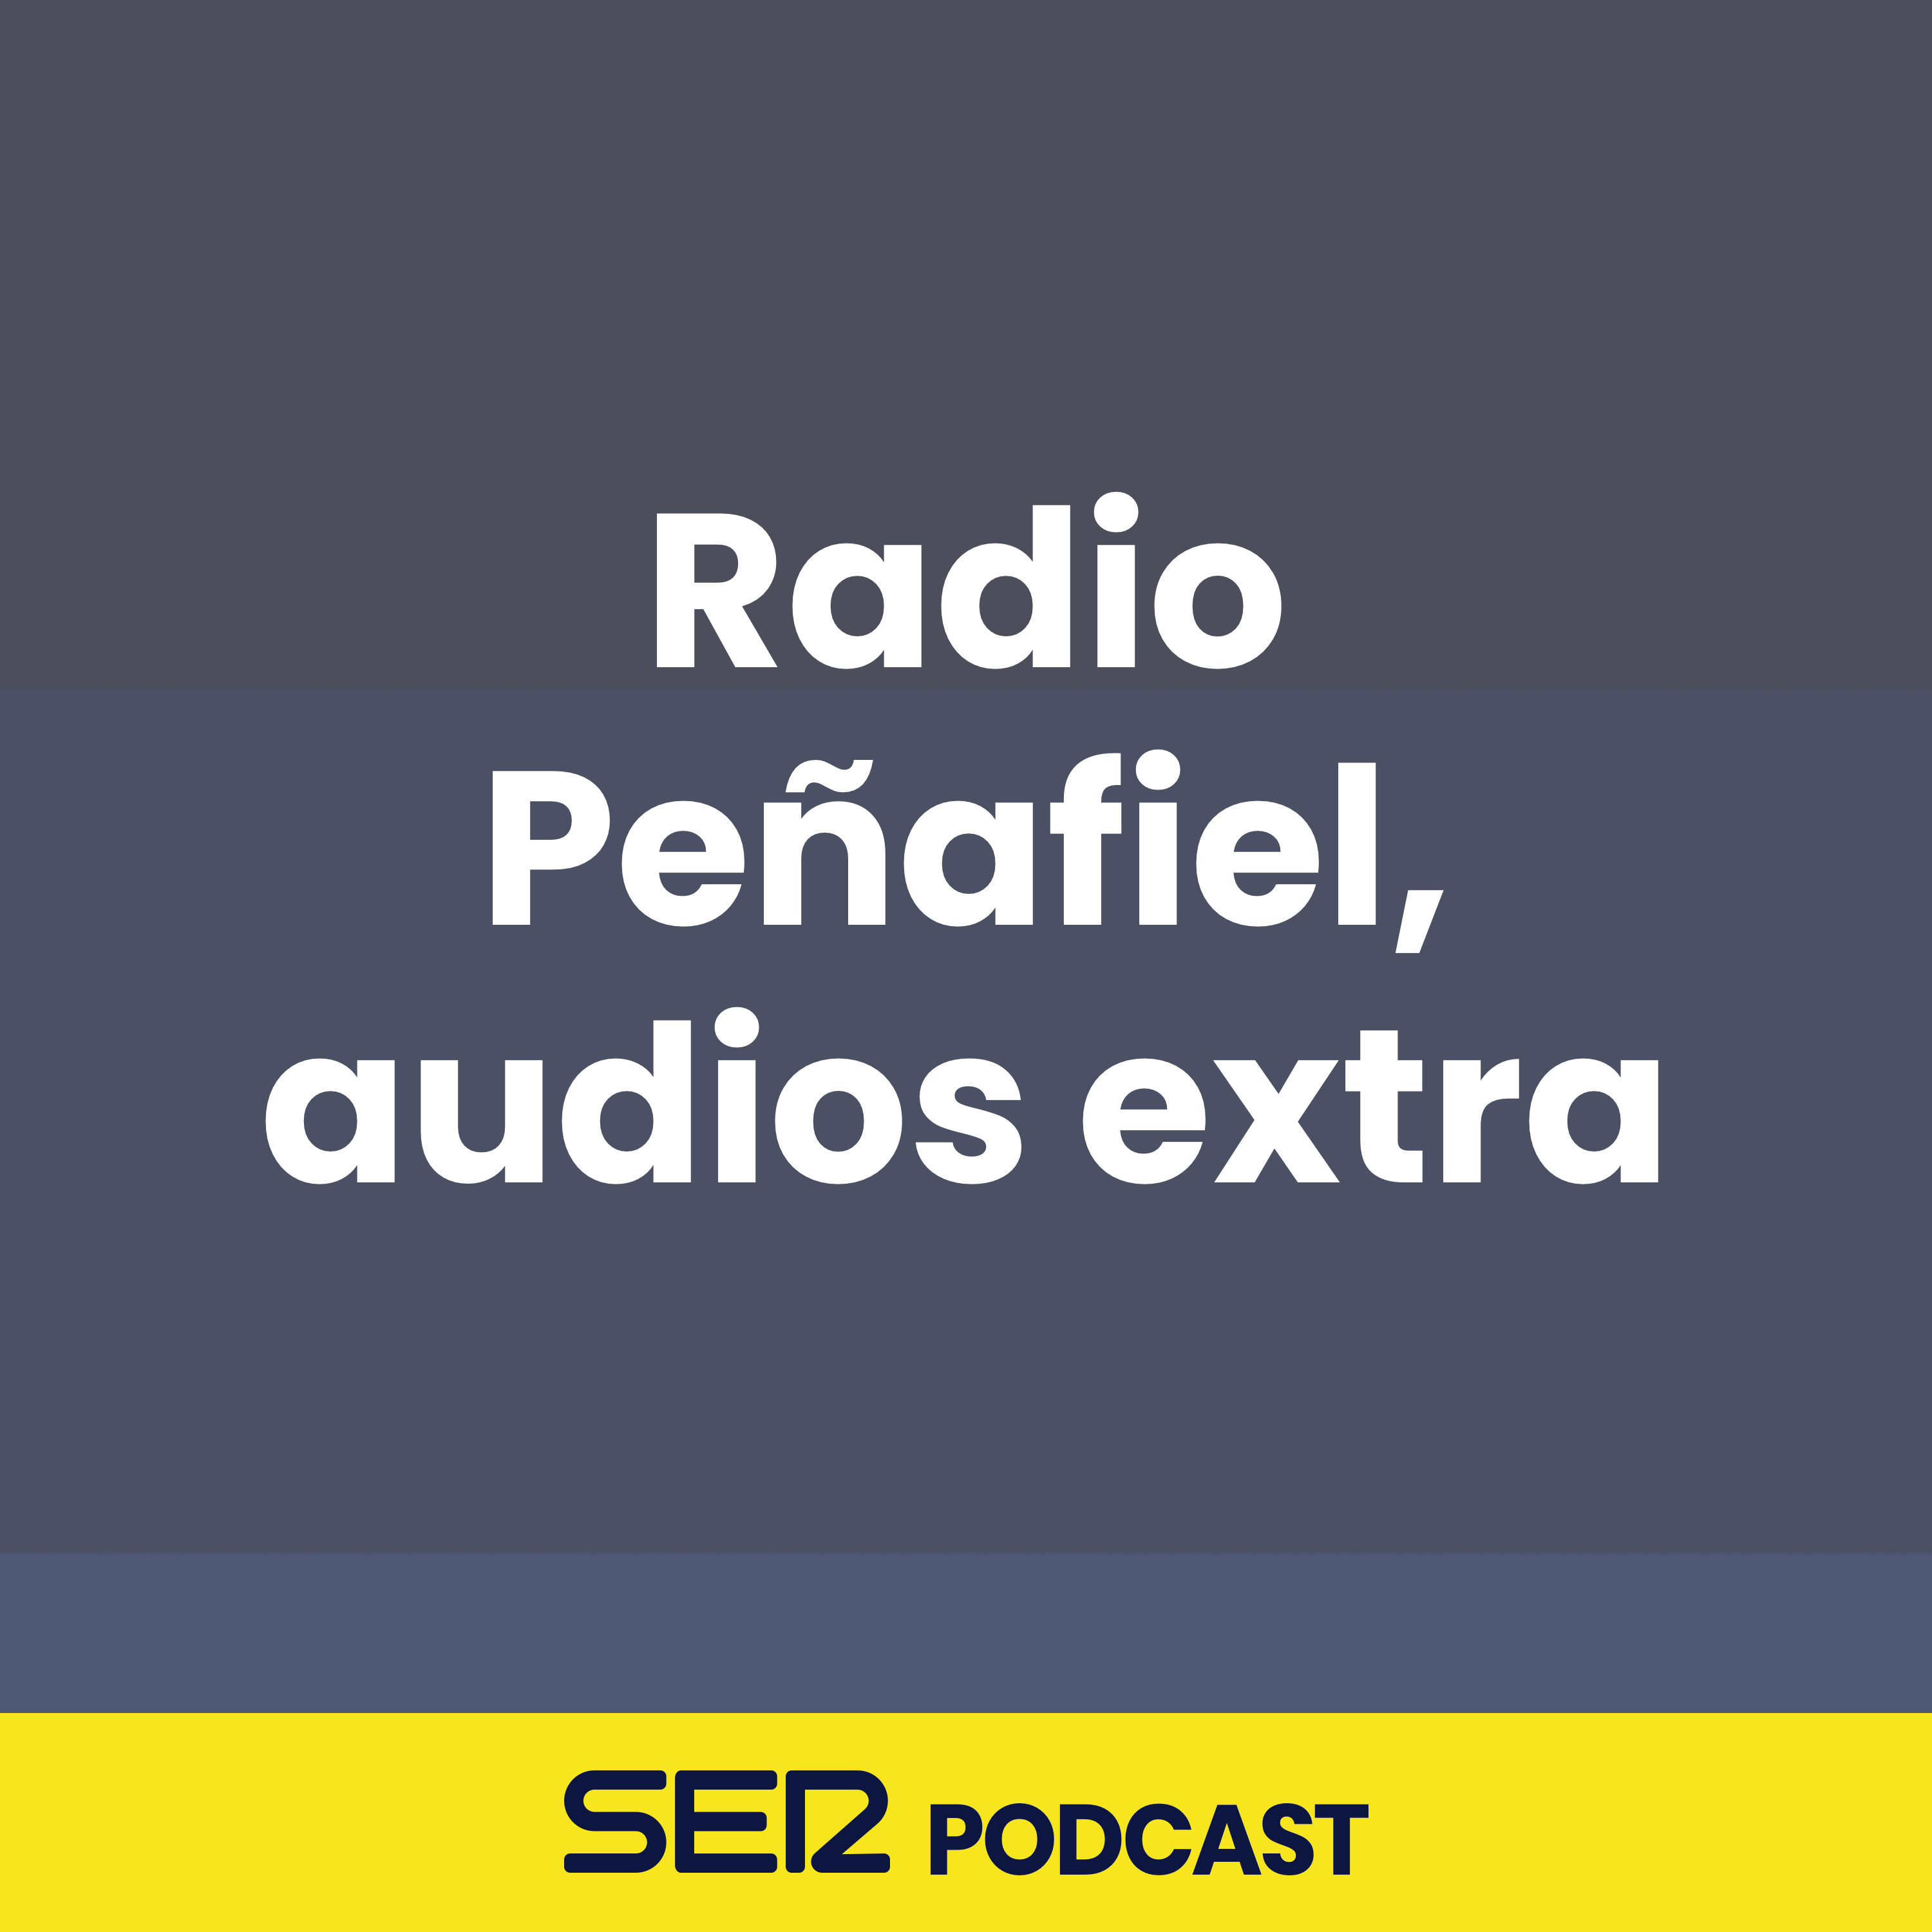 Radio Peñafiel, audios extra